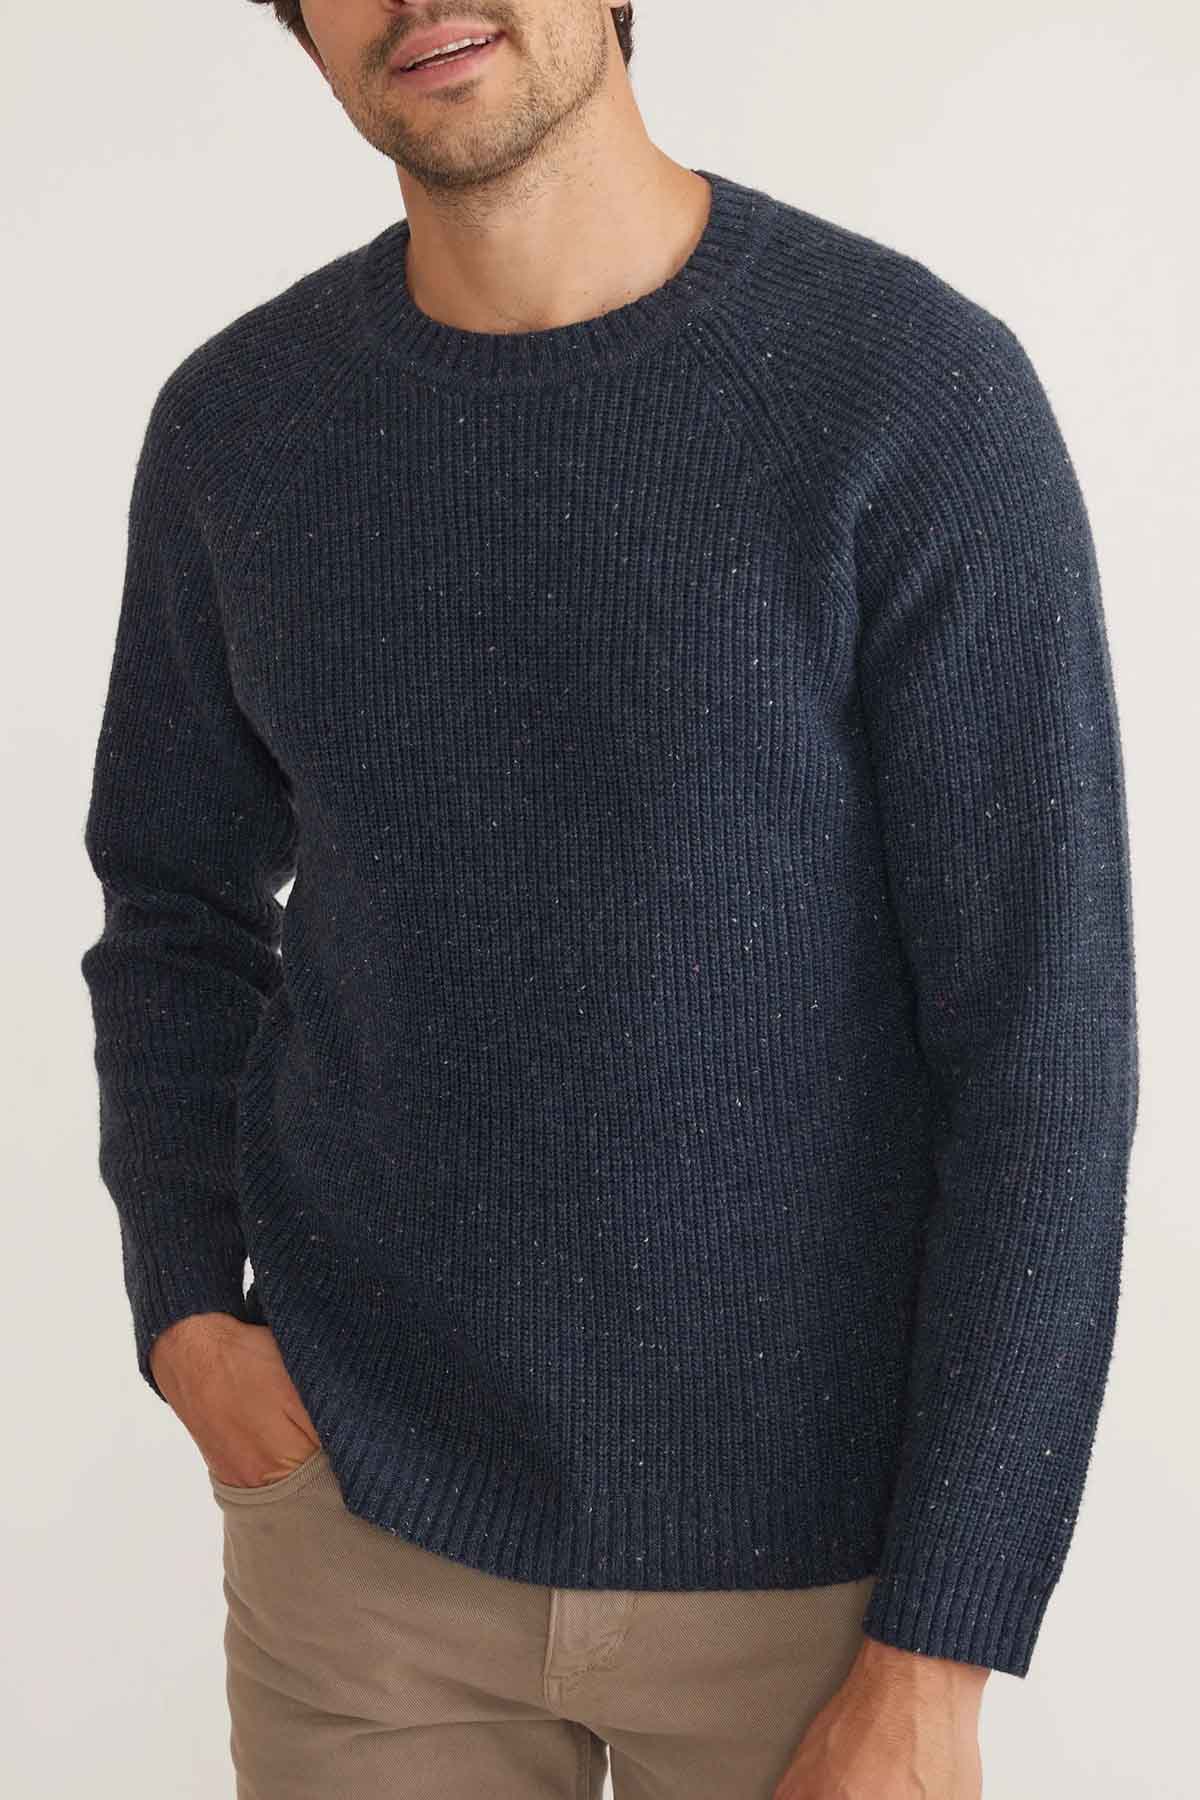 Marine Layer - Coleman Crewneck Sweater - Orion Blue - Profile